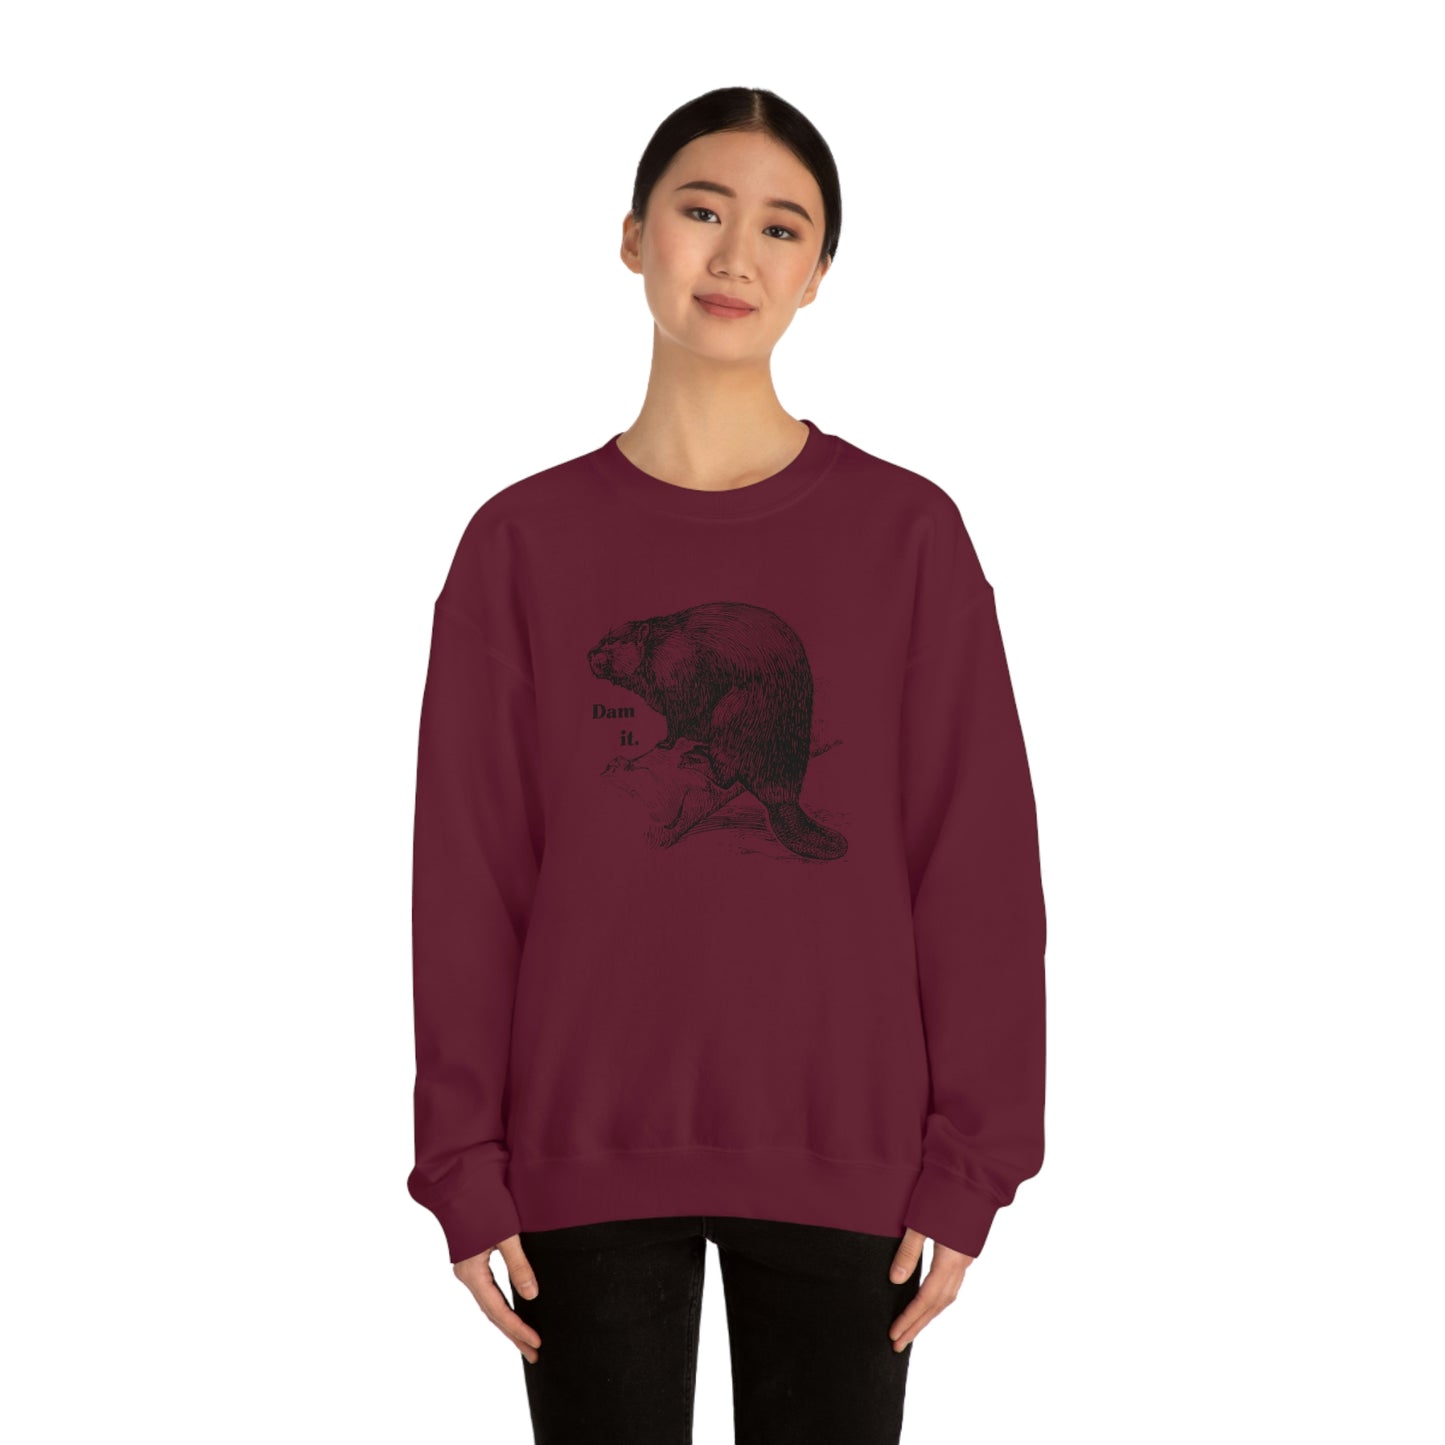 "Dam it" Gildan Graphic Crewneck Sweatshirt